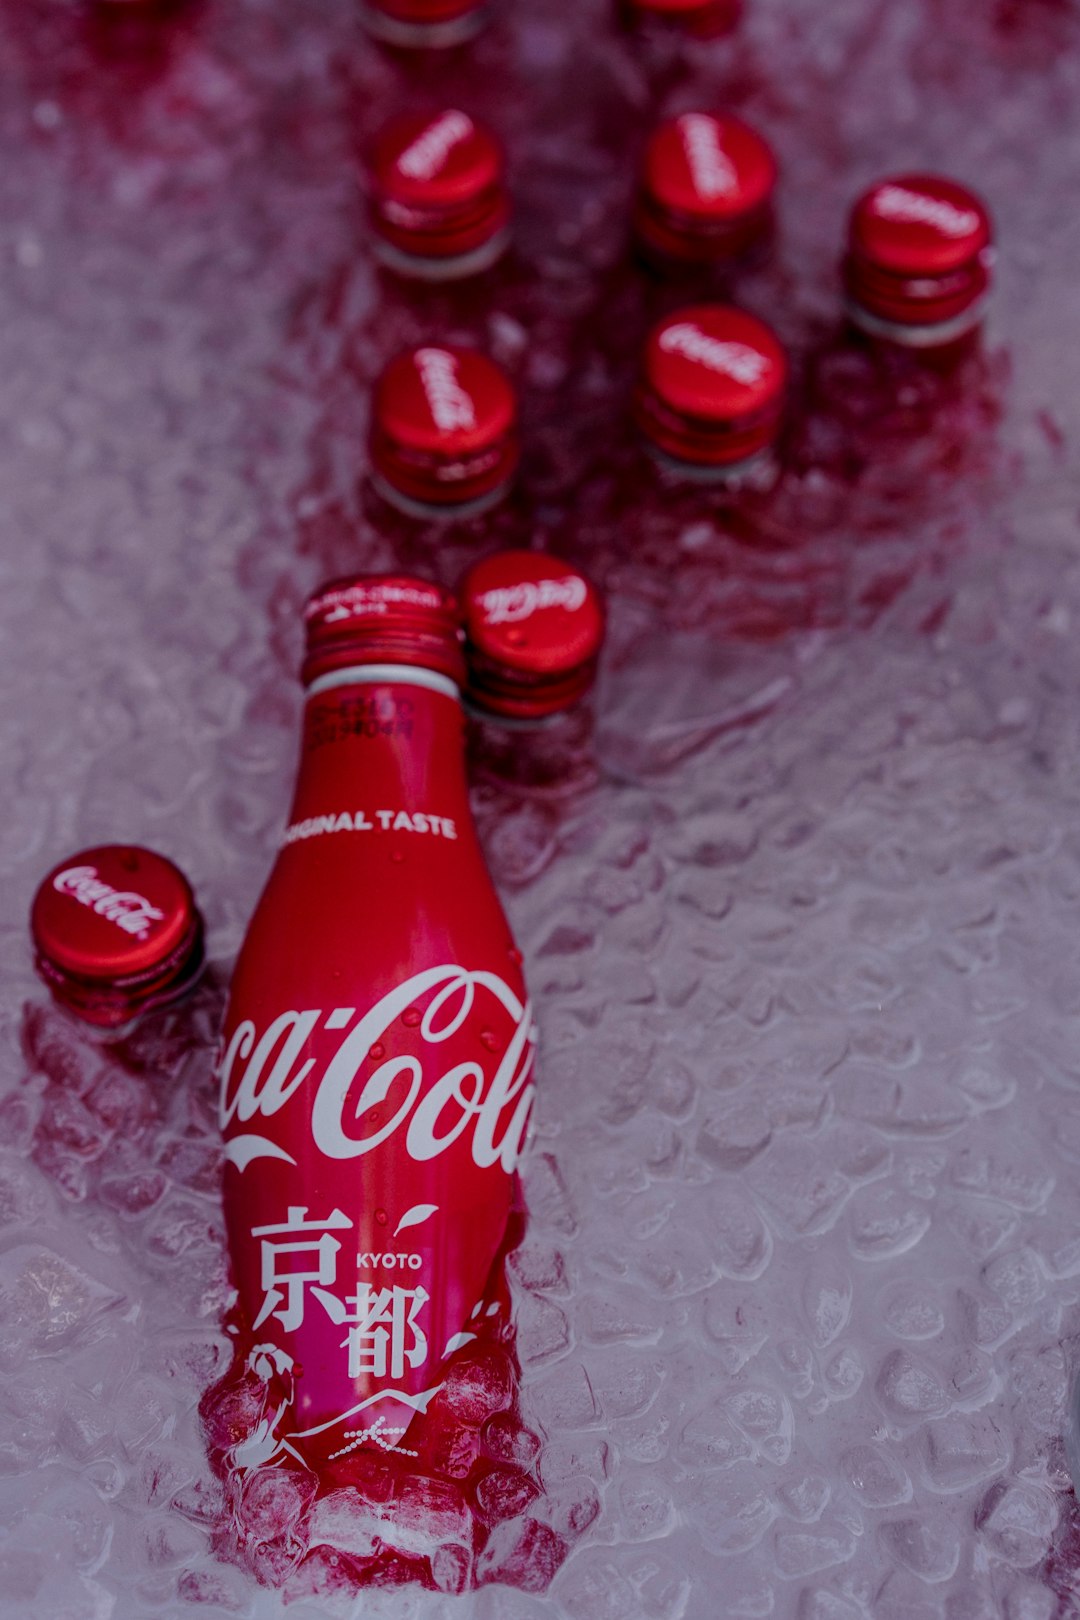 coca cola bottle on white textile